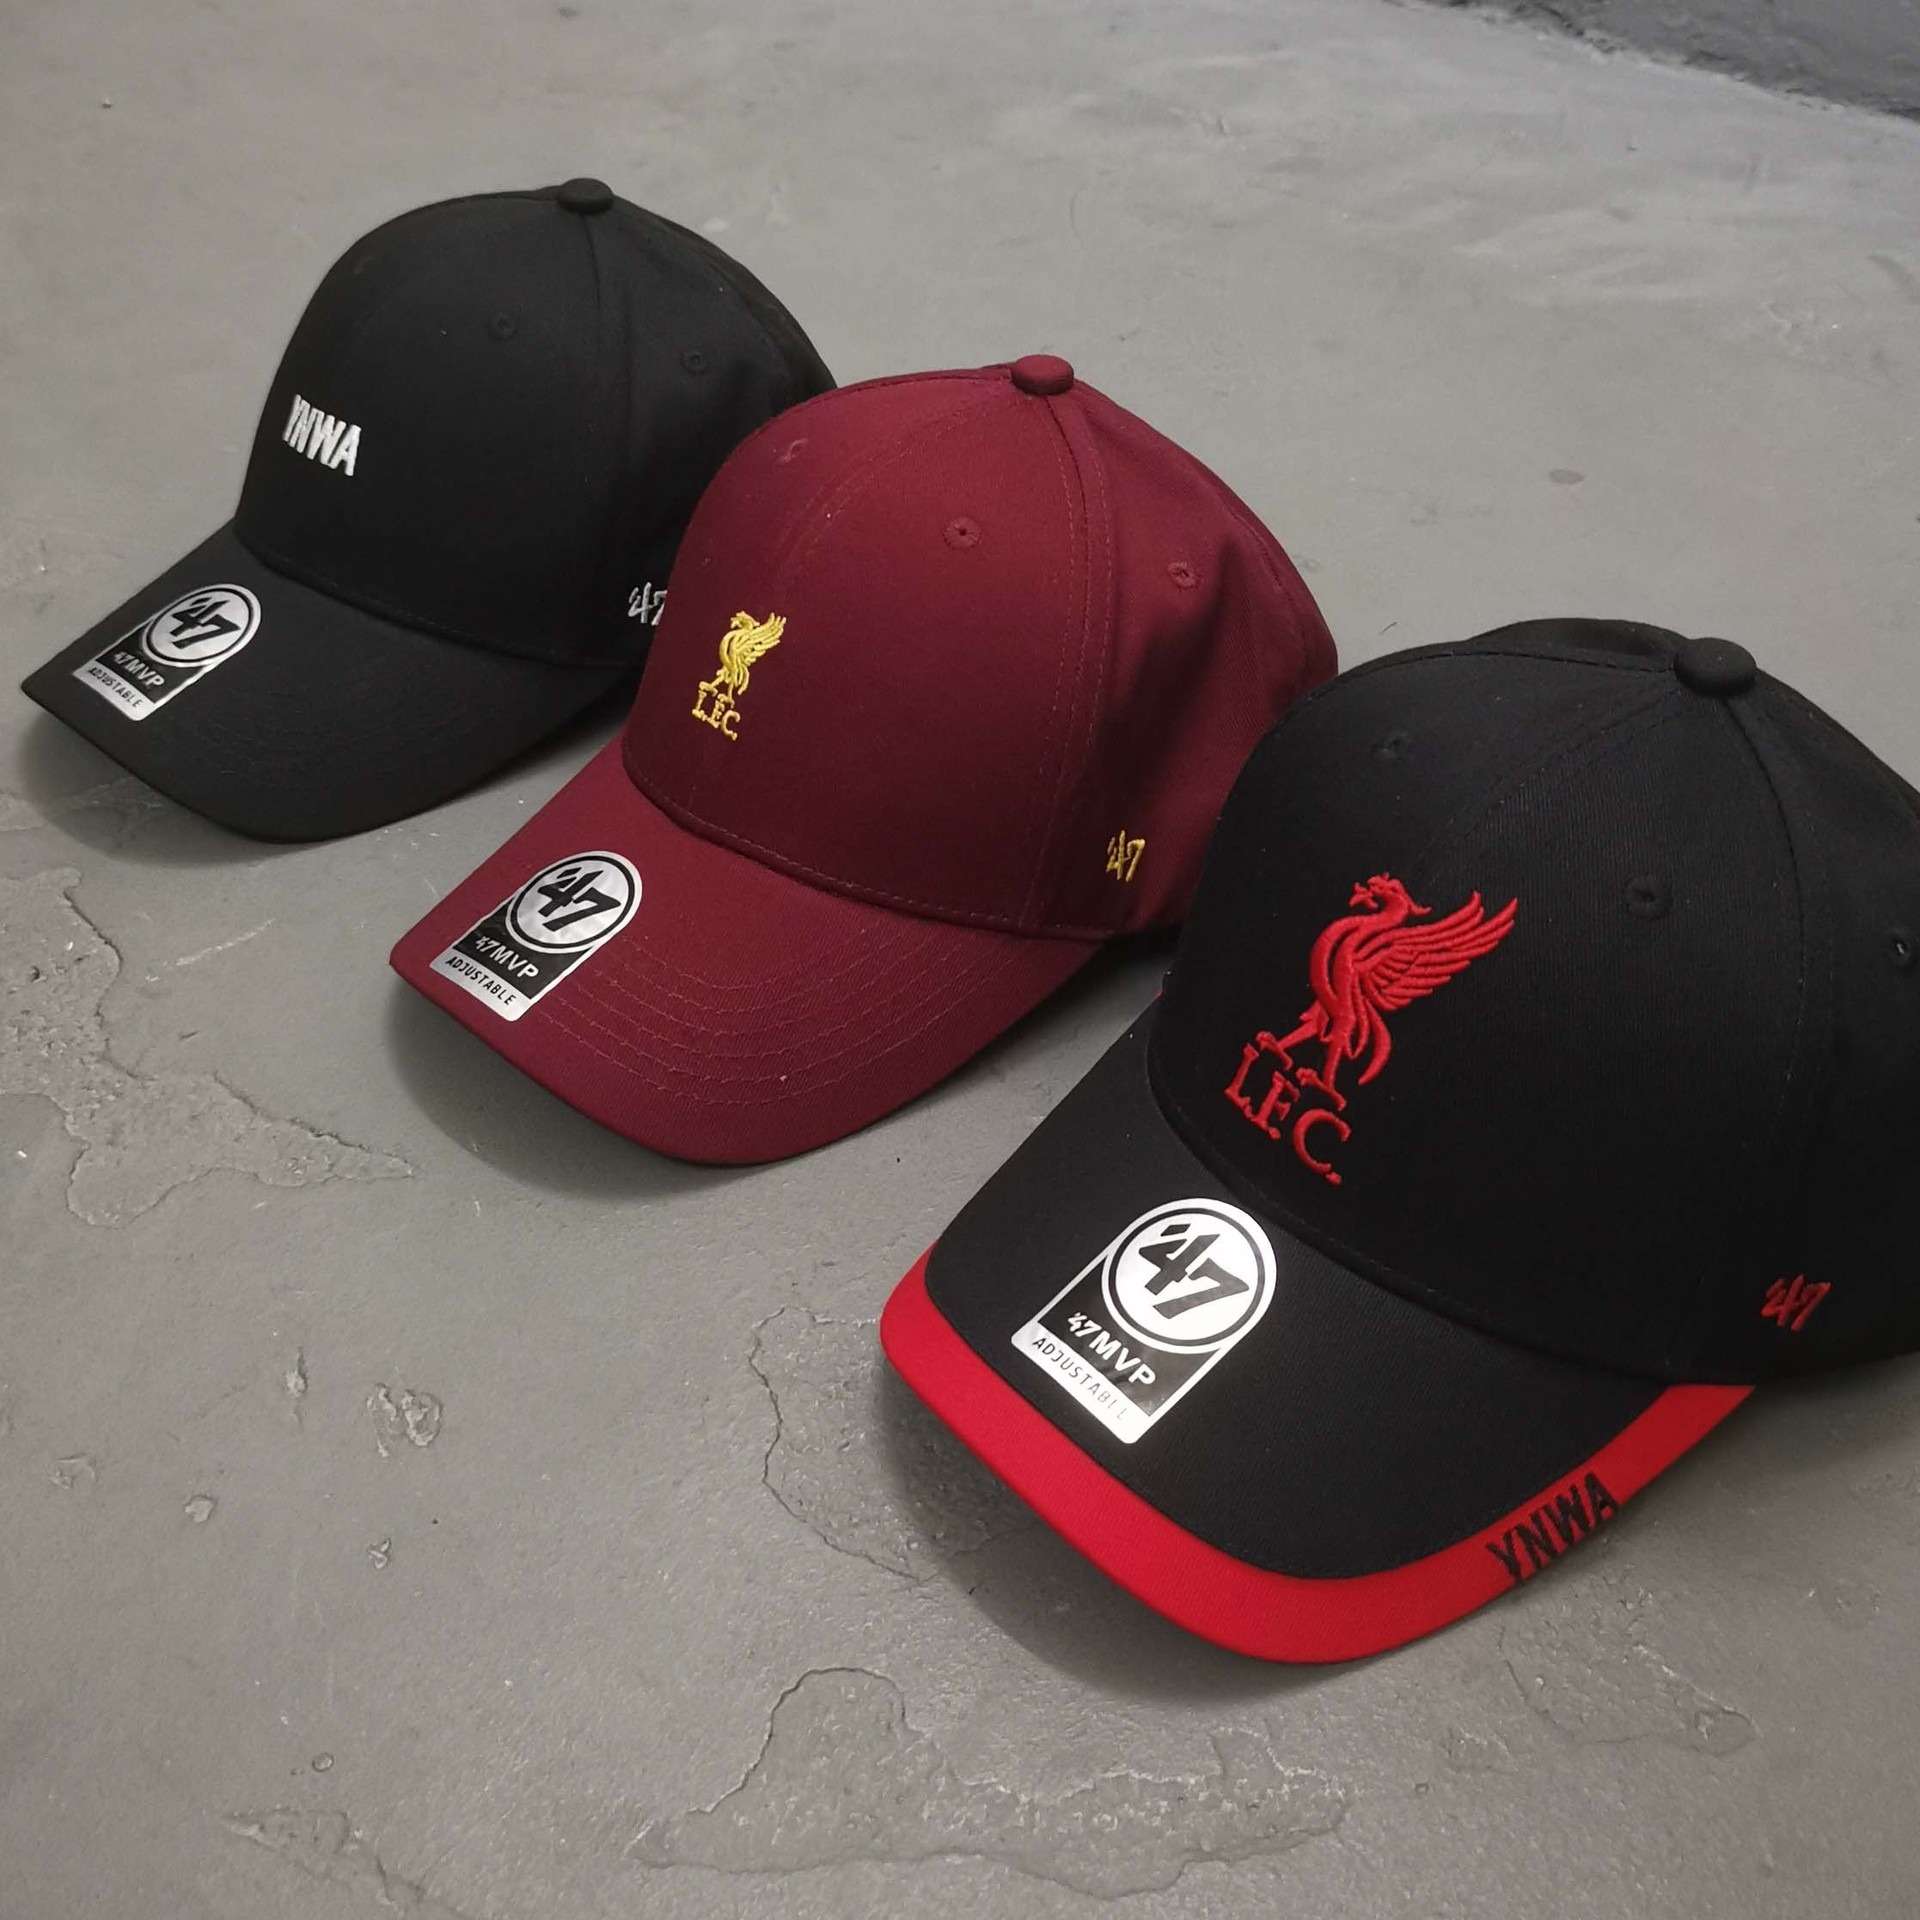 Liverpool F.C. Baseball Caps